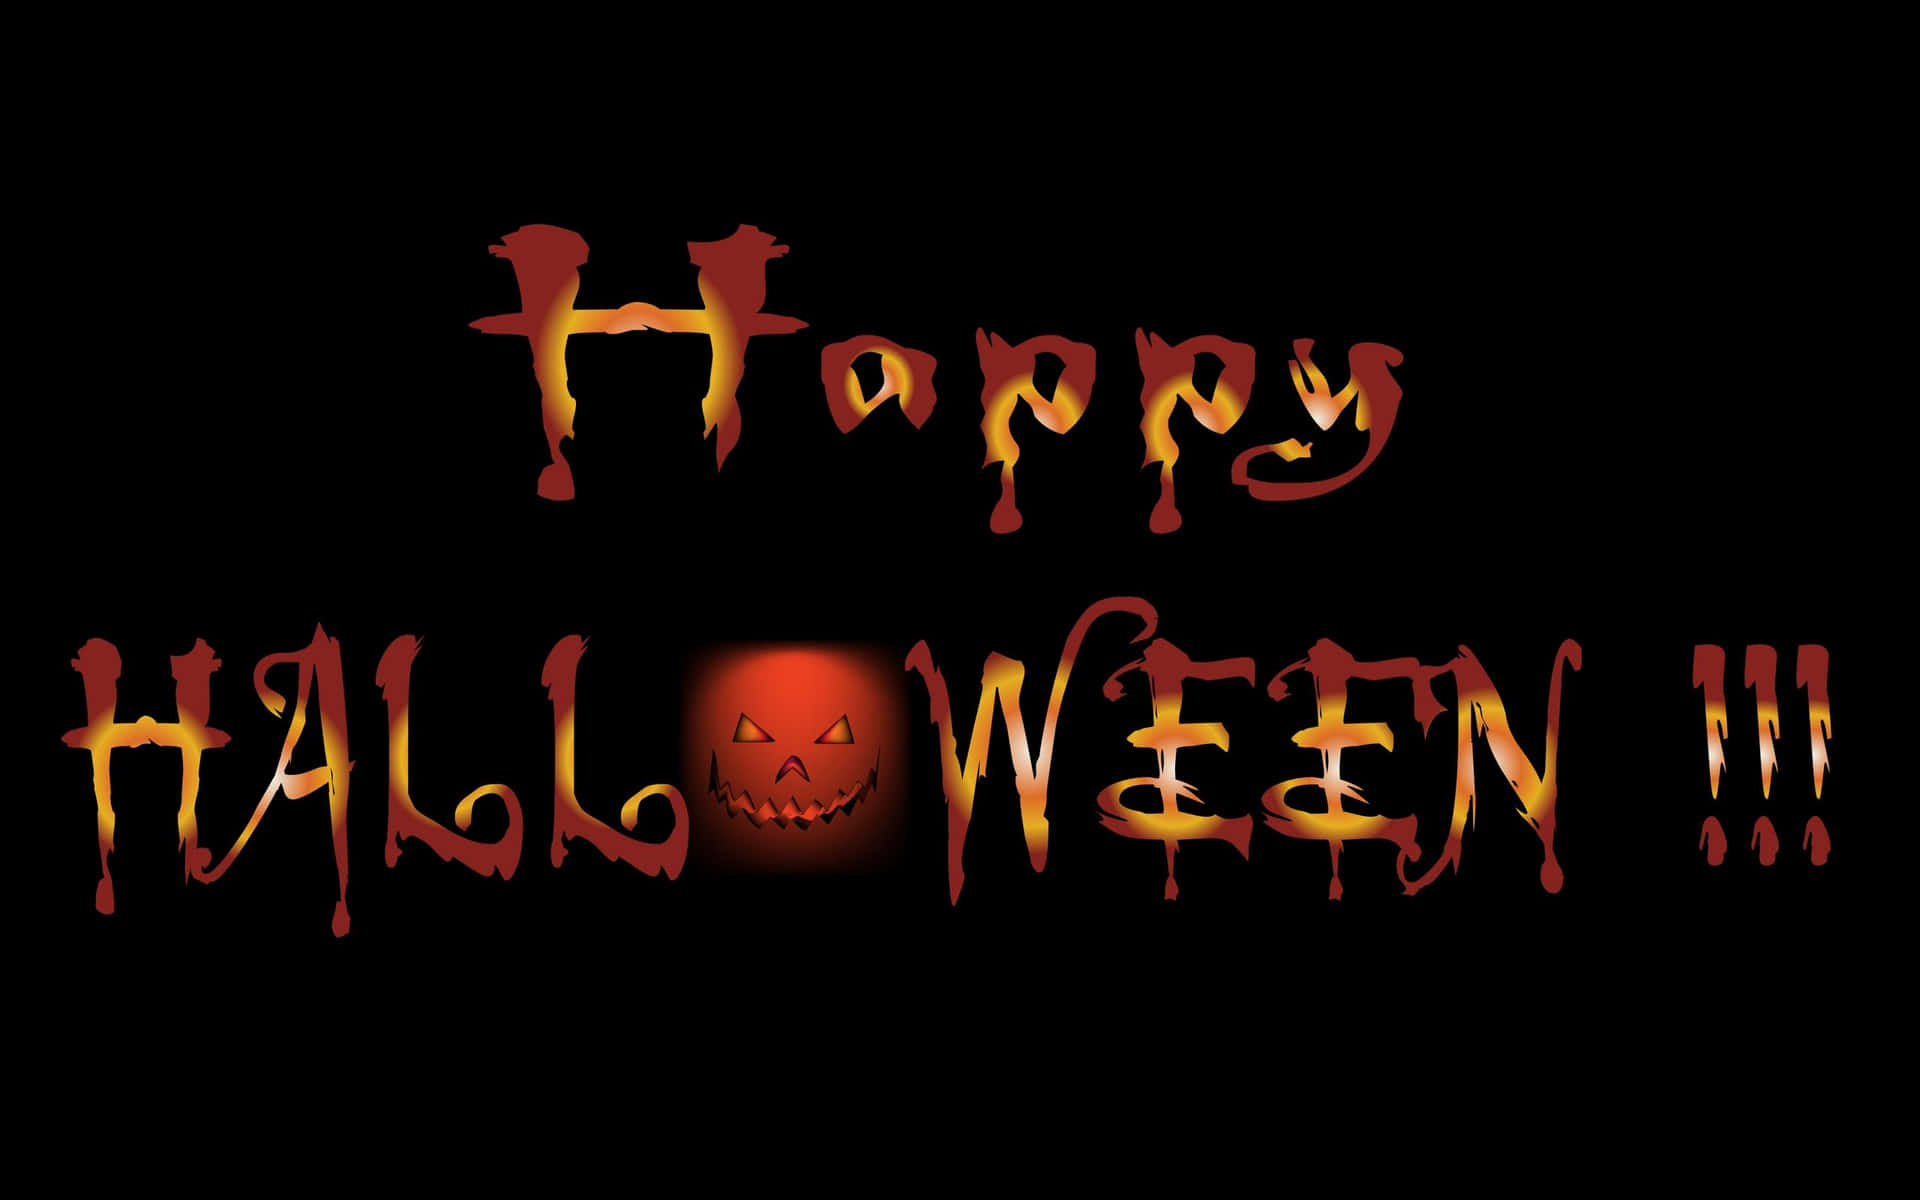 Aesthetic Creepy Halloween Greeting Typography Background